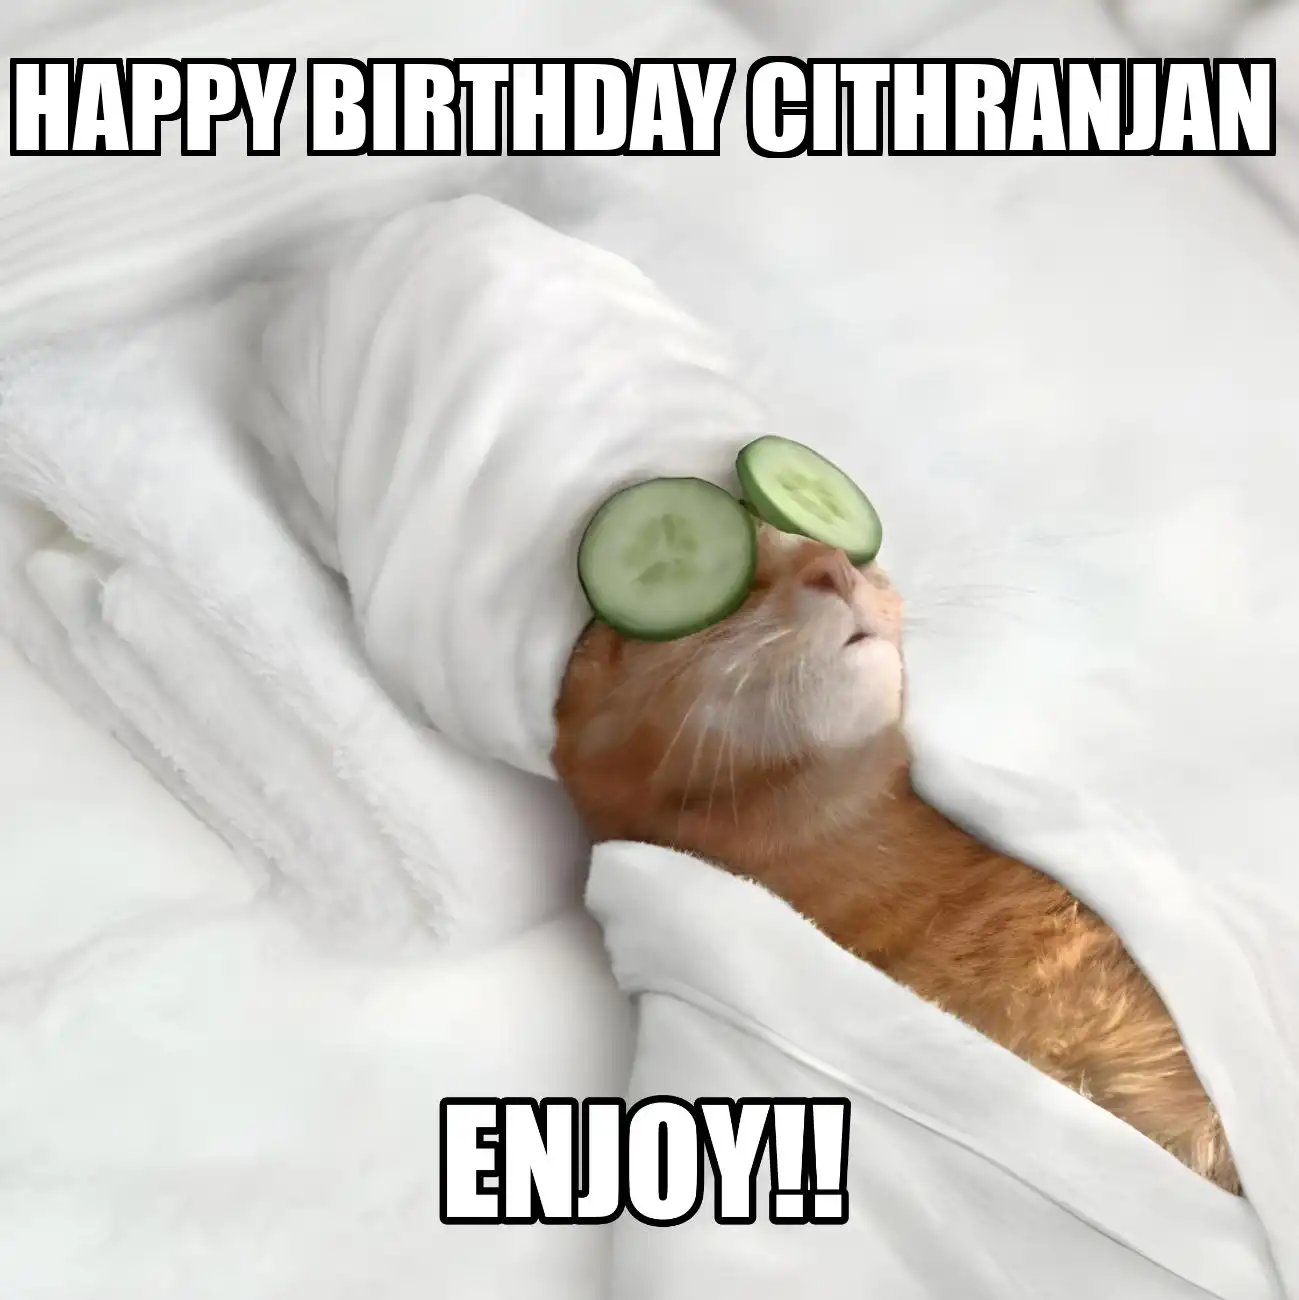 Happy Birthday Cithranjan Enjoy Cat Meme